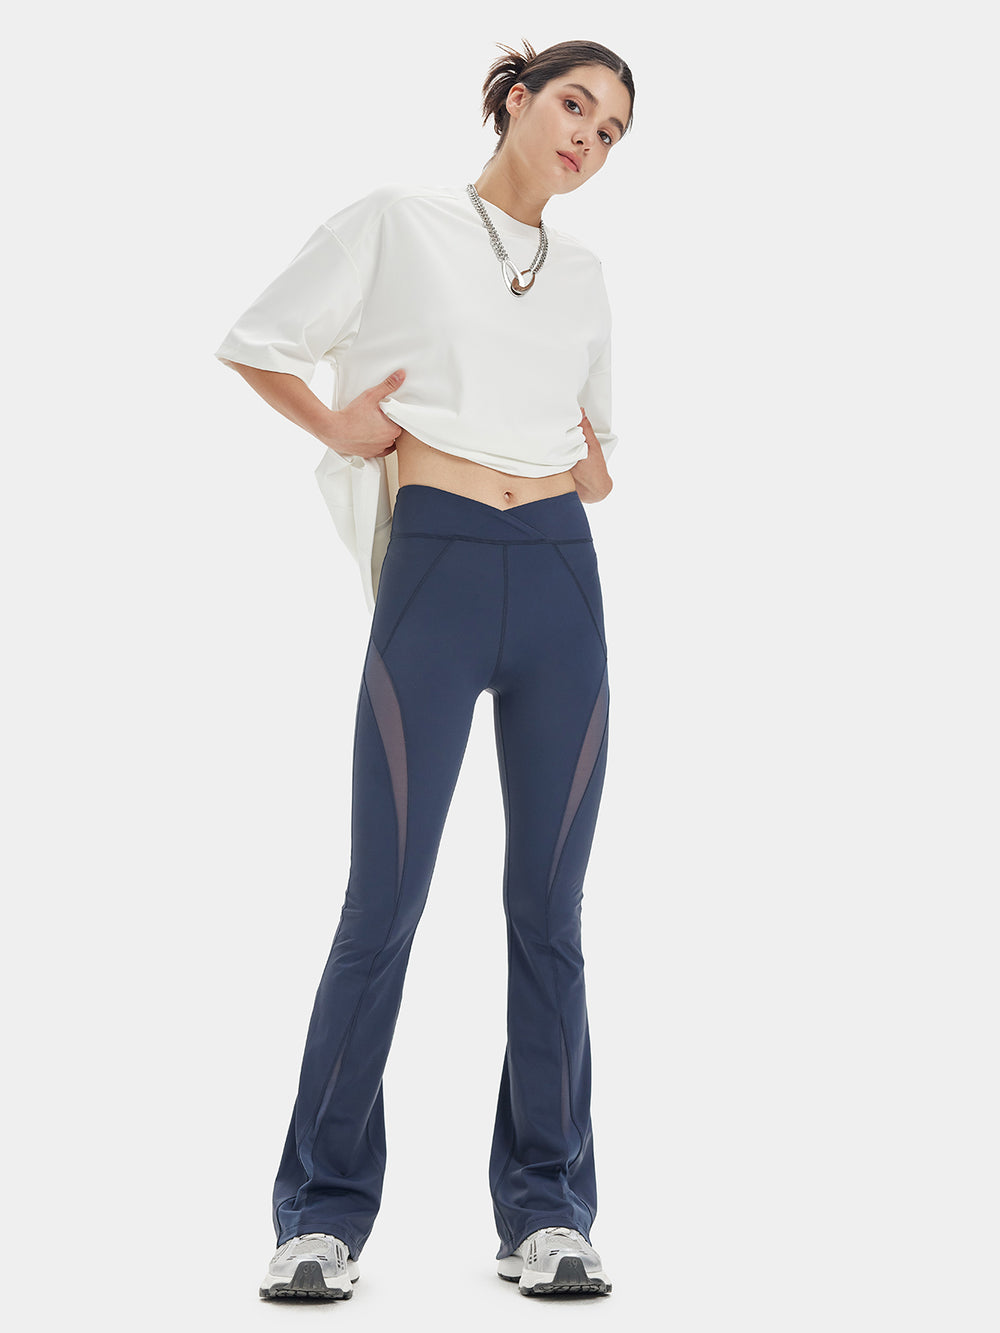 T-one Women's High Waist Slim Stretch Pants-Navy